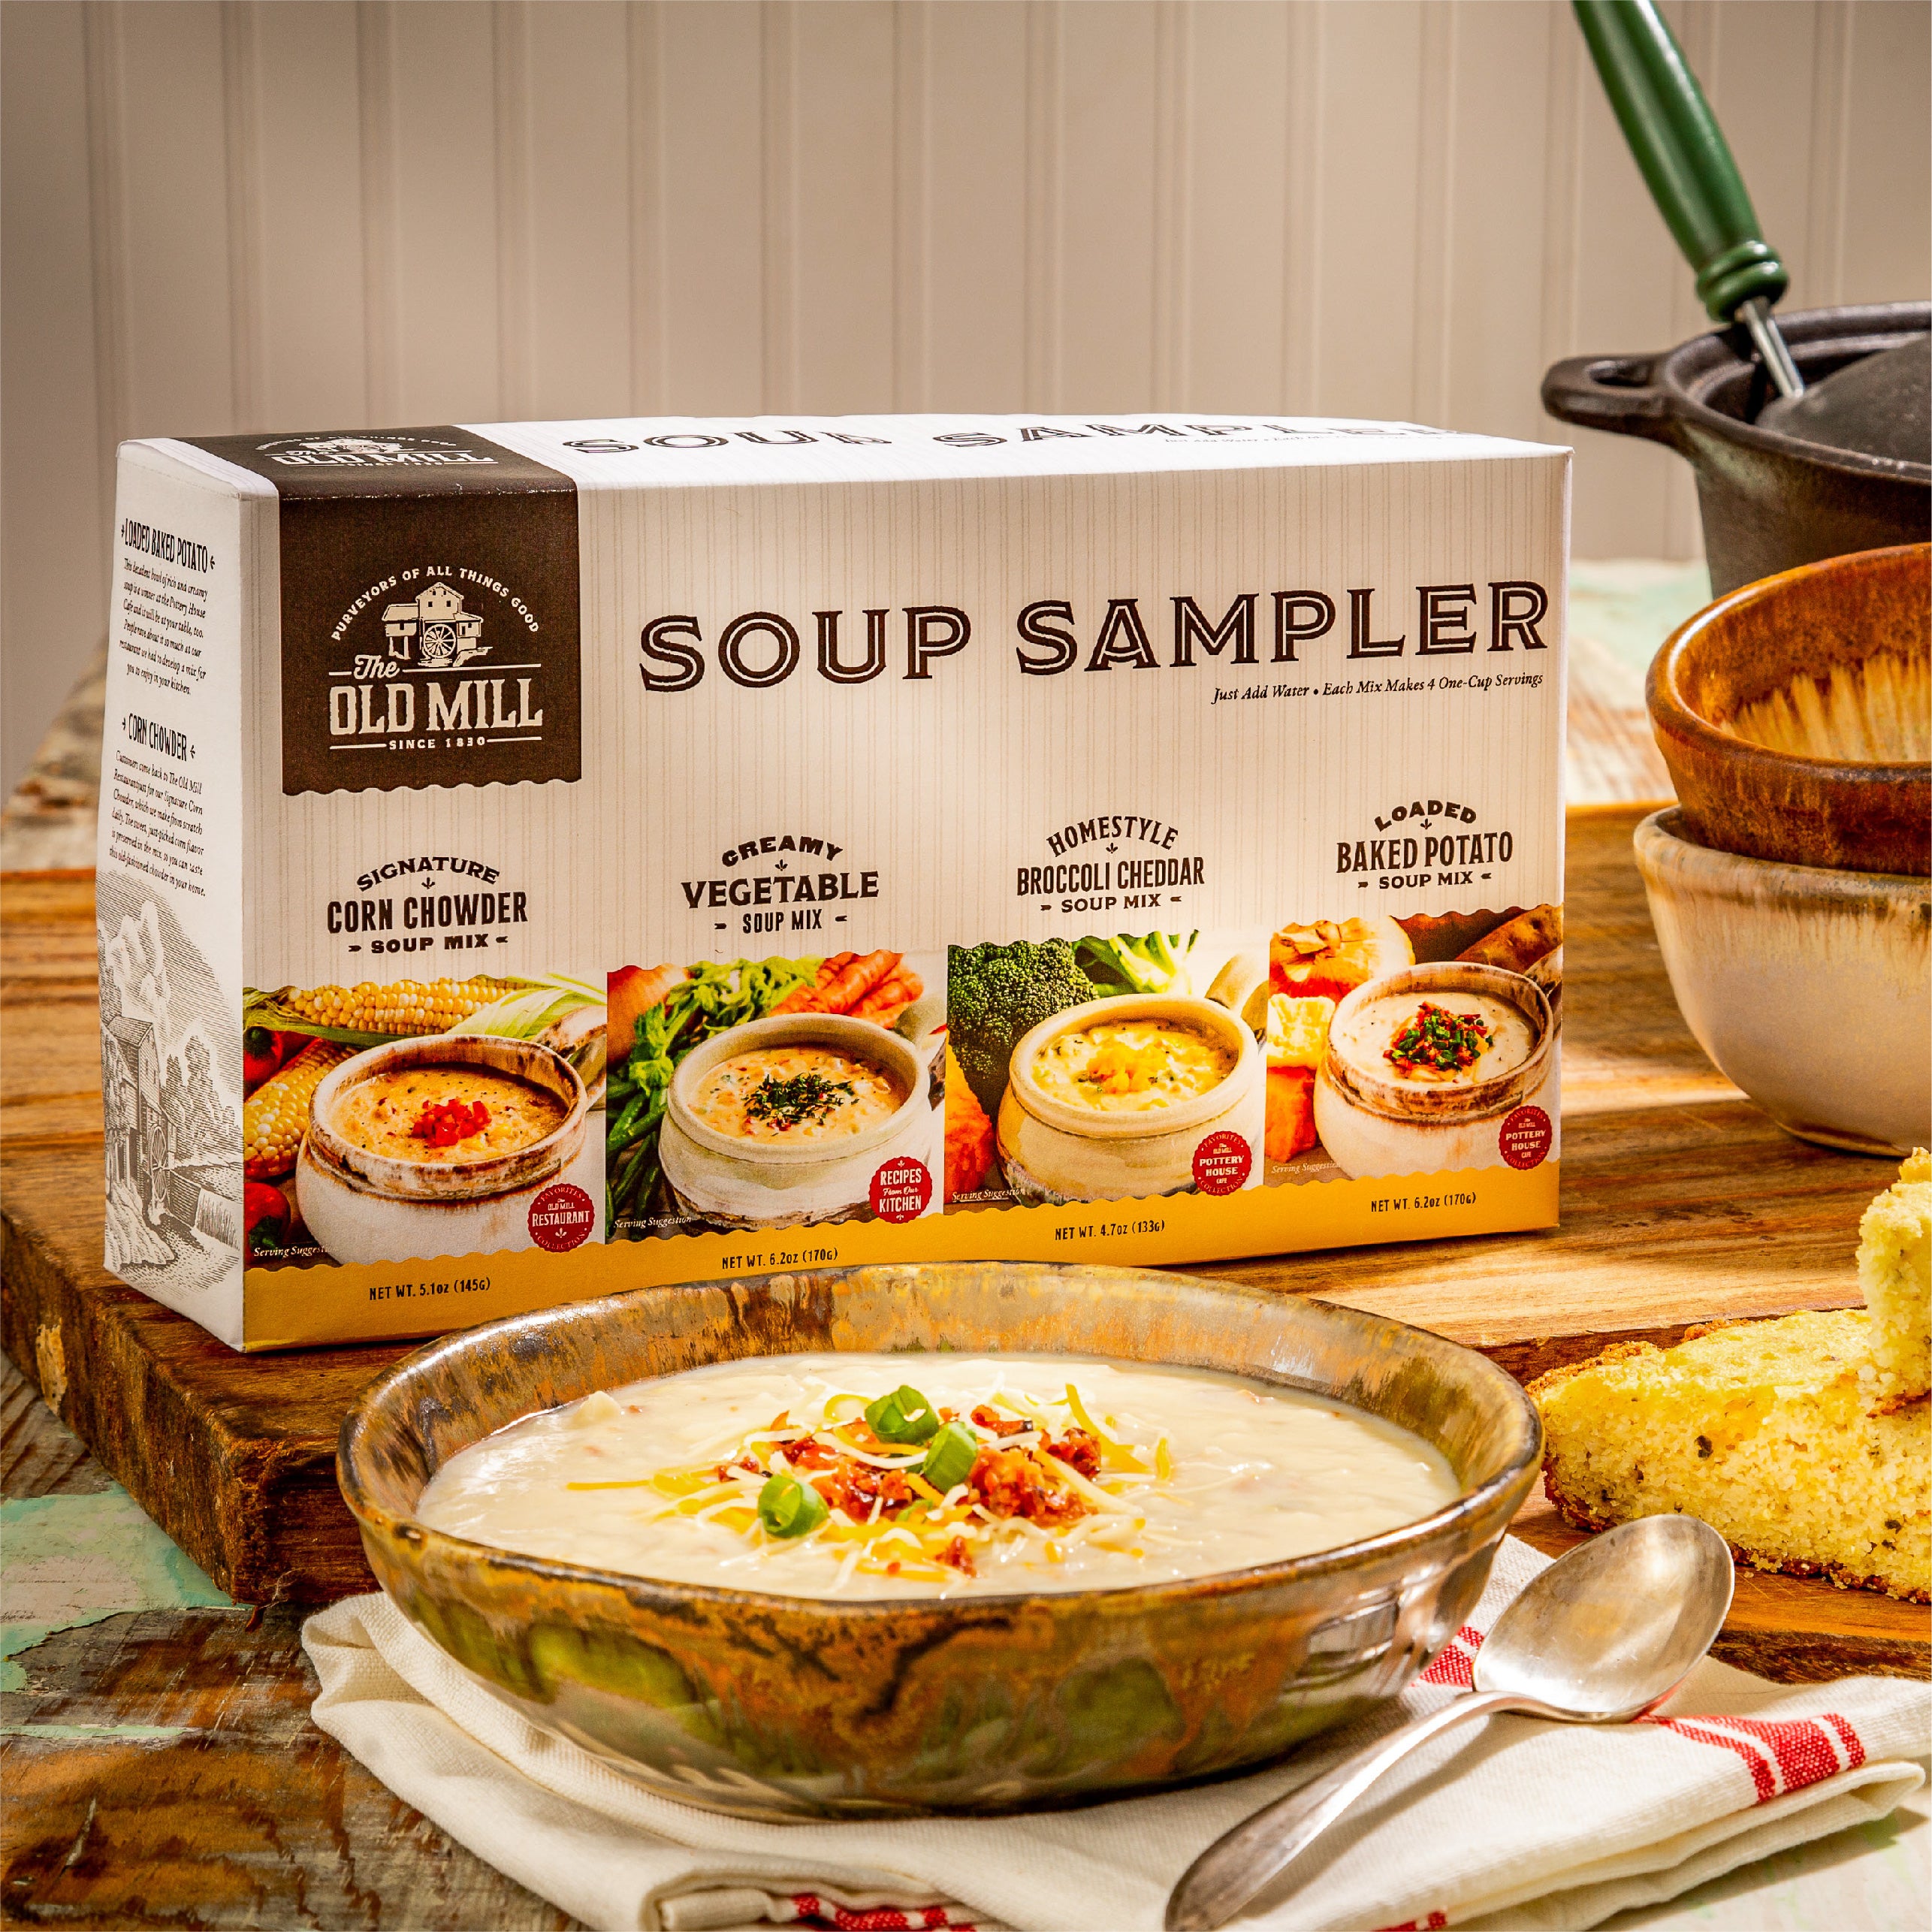 Soup Sampler – The Old Mill